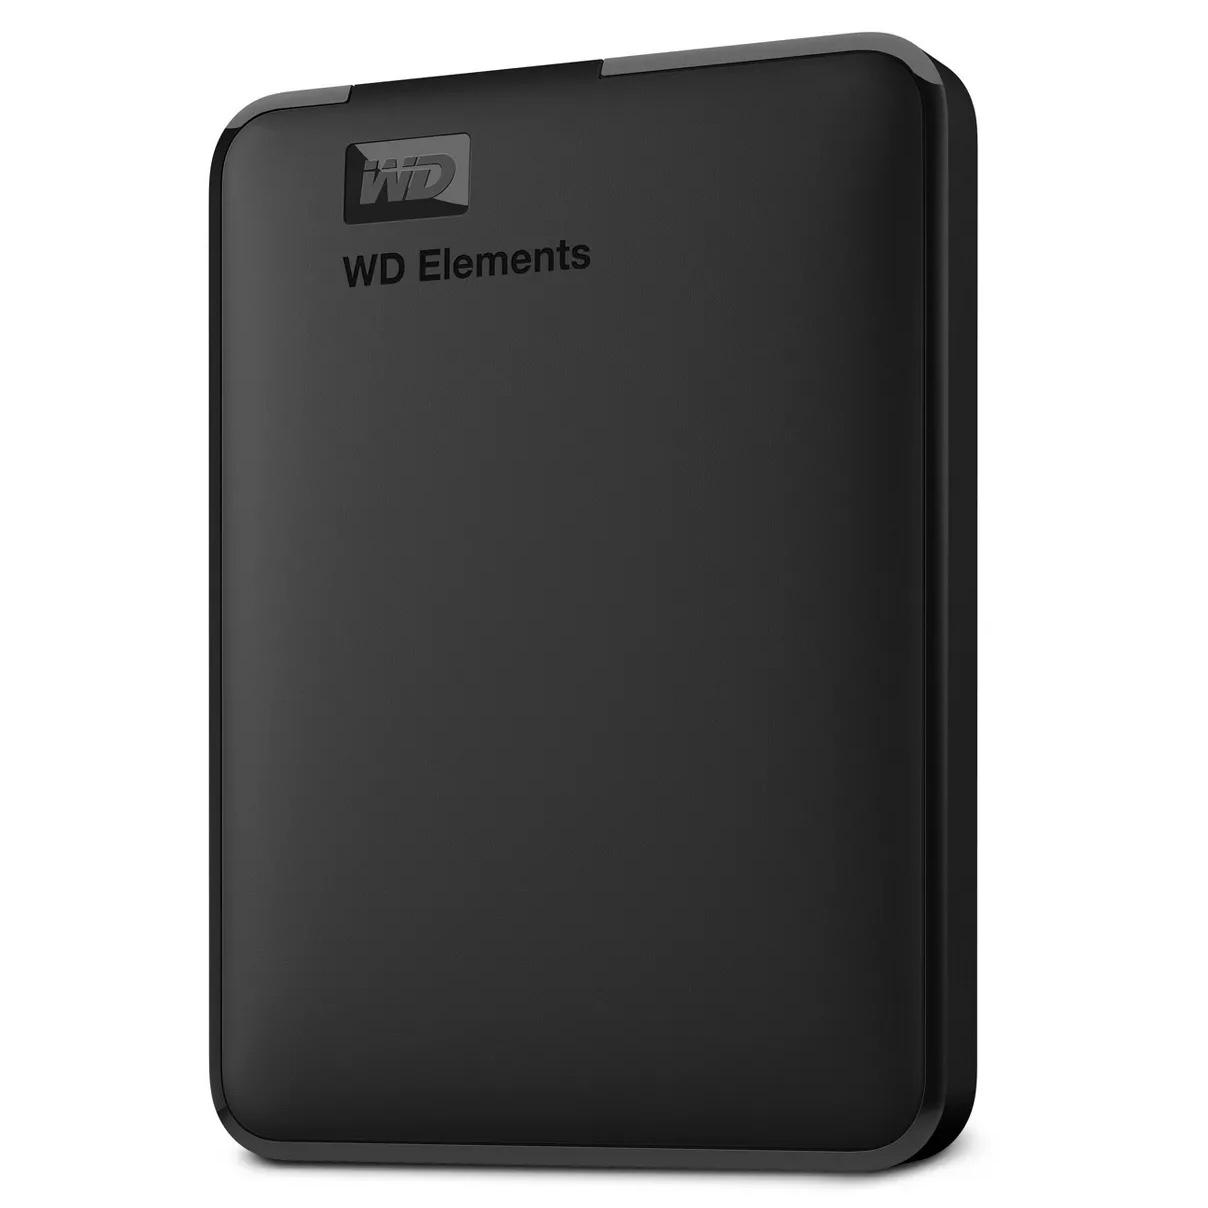 3TB Western Digital Elements USB 3.0 Portable Hard Drive for $62.99 Shipped